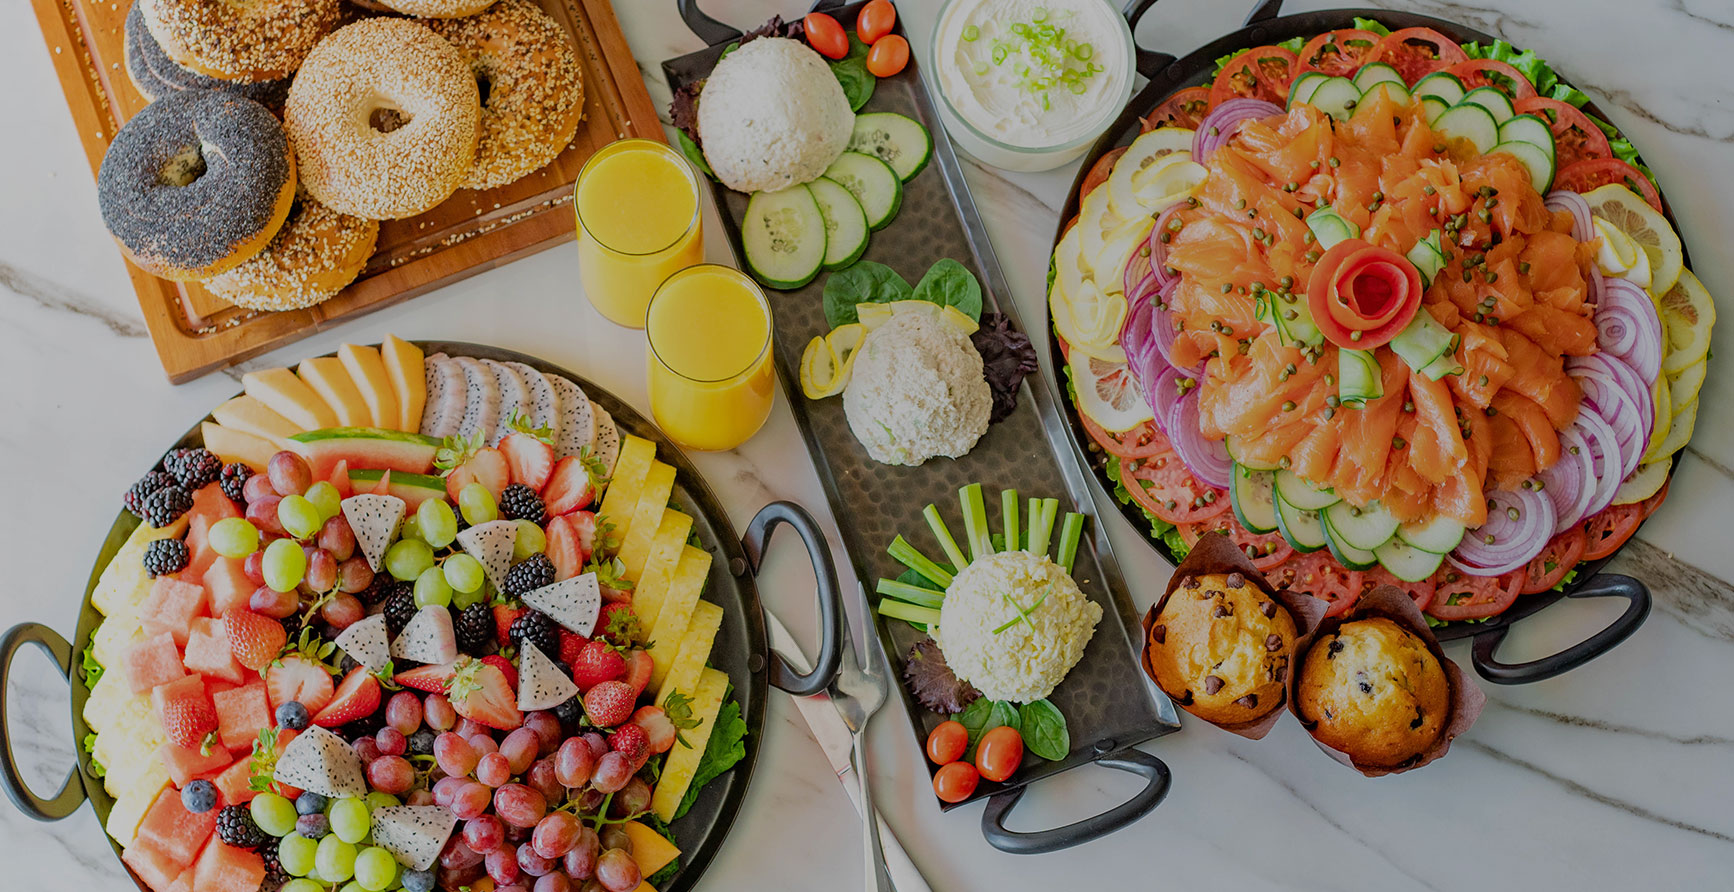 catering dishes including fresh fruit platter, bagels, orange juice and more